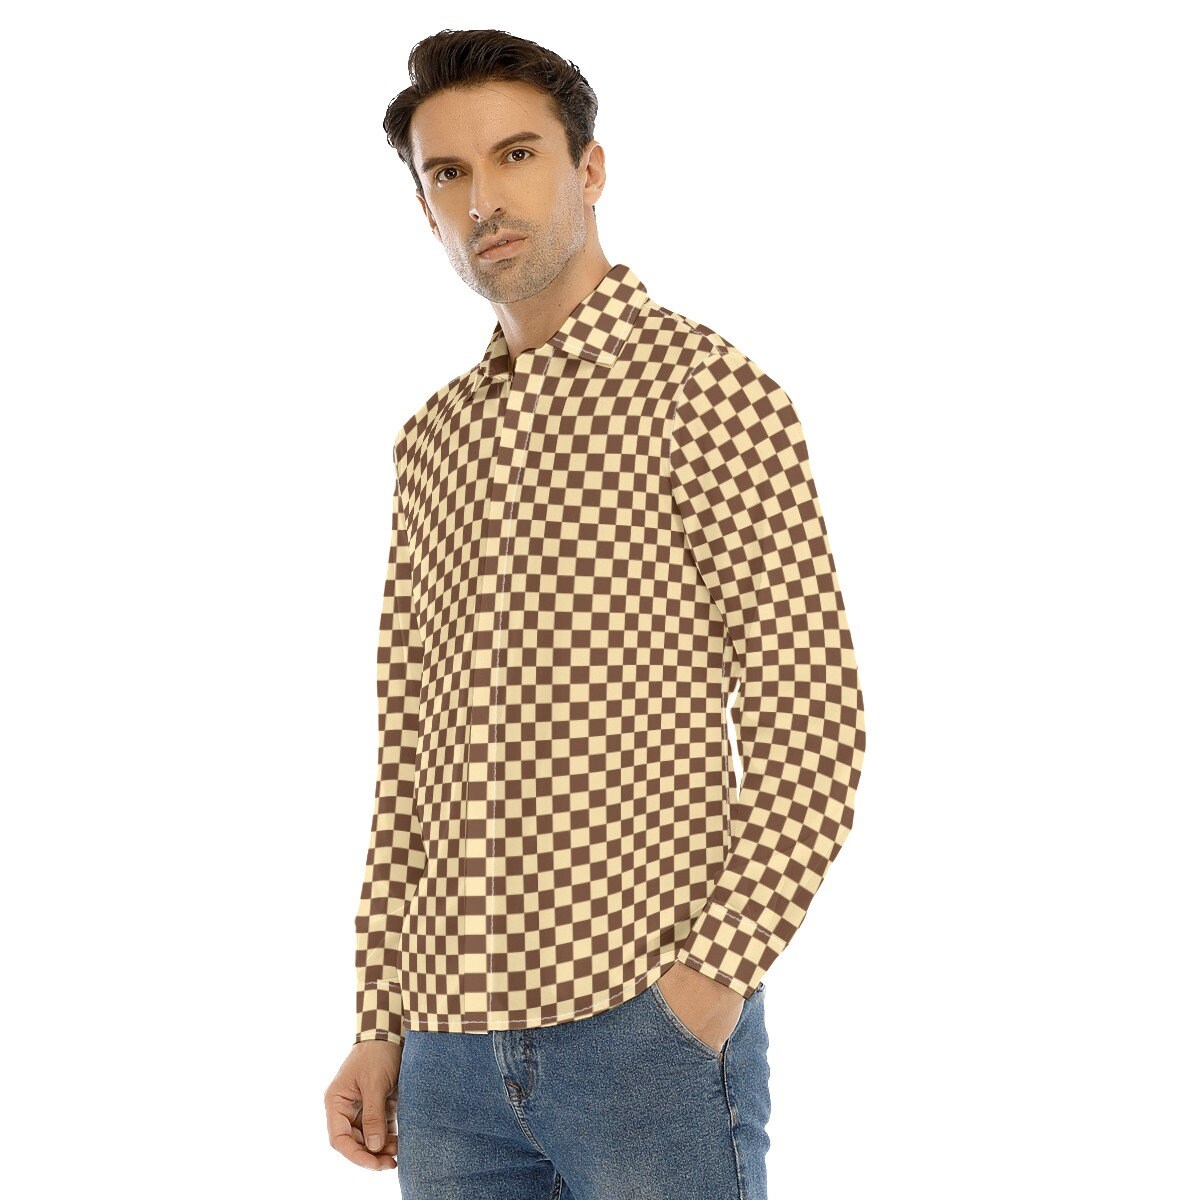 Brown Checker Shirt, Men's Checker Shirt, Vintage 60s 70s style shirt, Retro Shirt Men, 70s inspired shirt, 70s clothing Men, Hippie Shirt